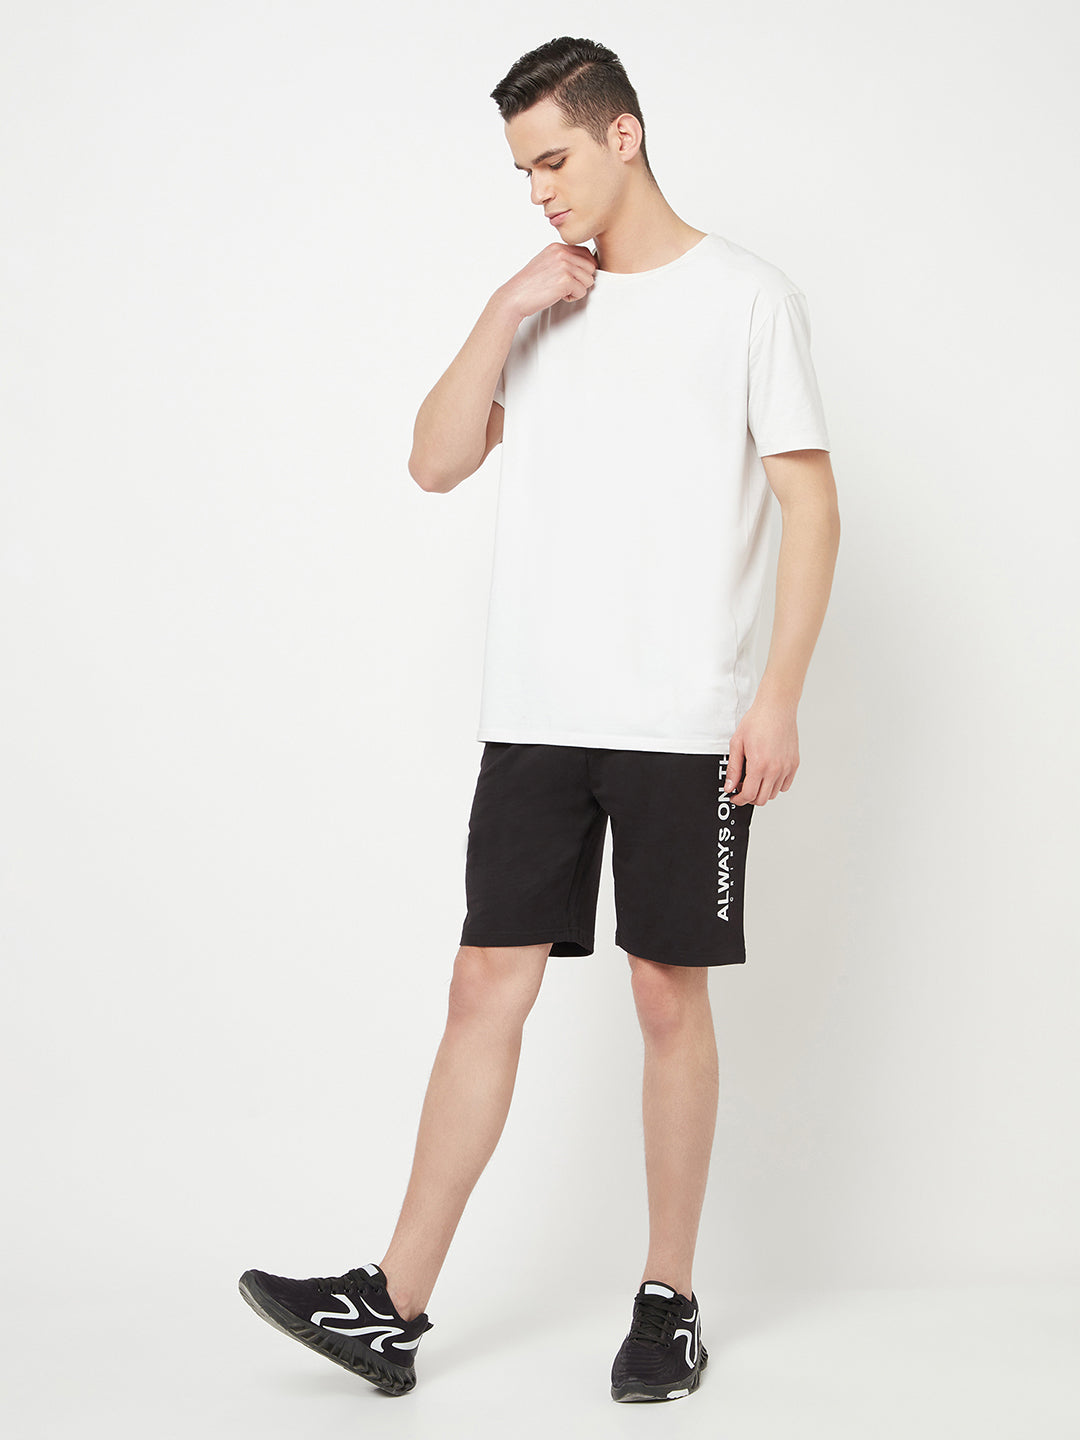 Black Printed Sports Shorts - Men Shorts